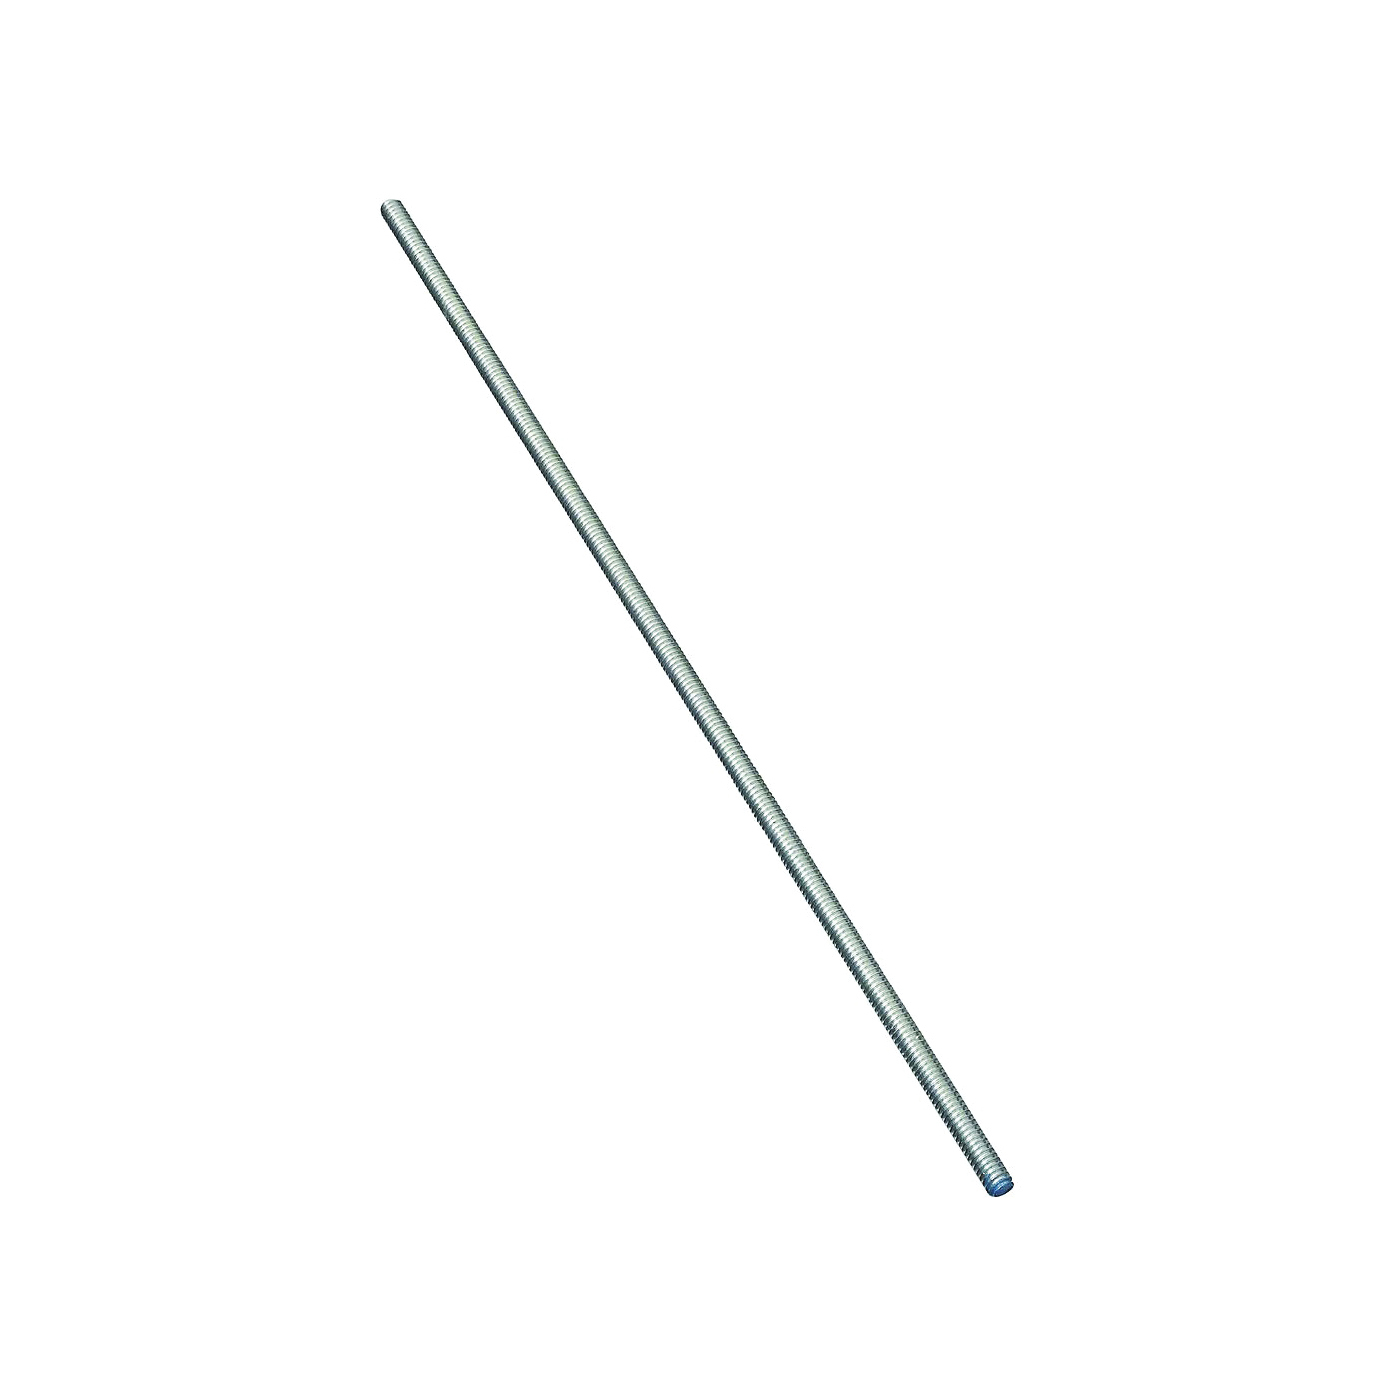 N179-416 Threaded Rod, 1/4-20 Thread, 24 in L, A Grade, Steel, Zinc, UNC Thread